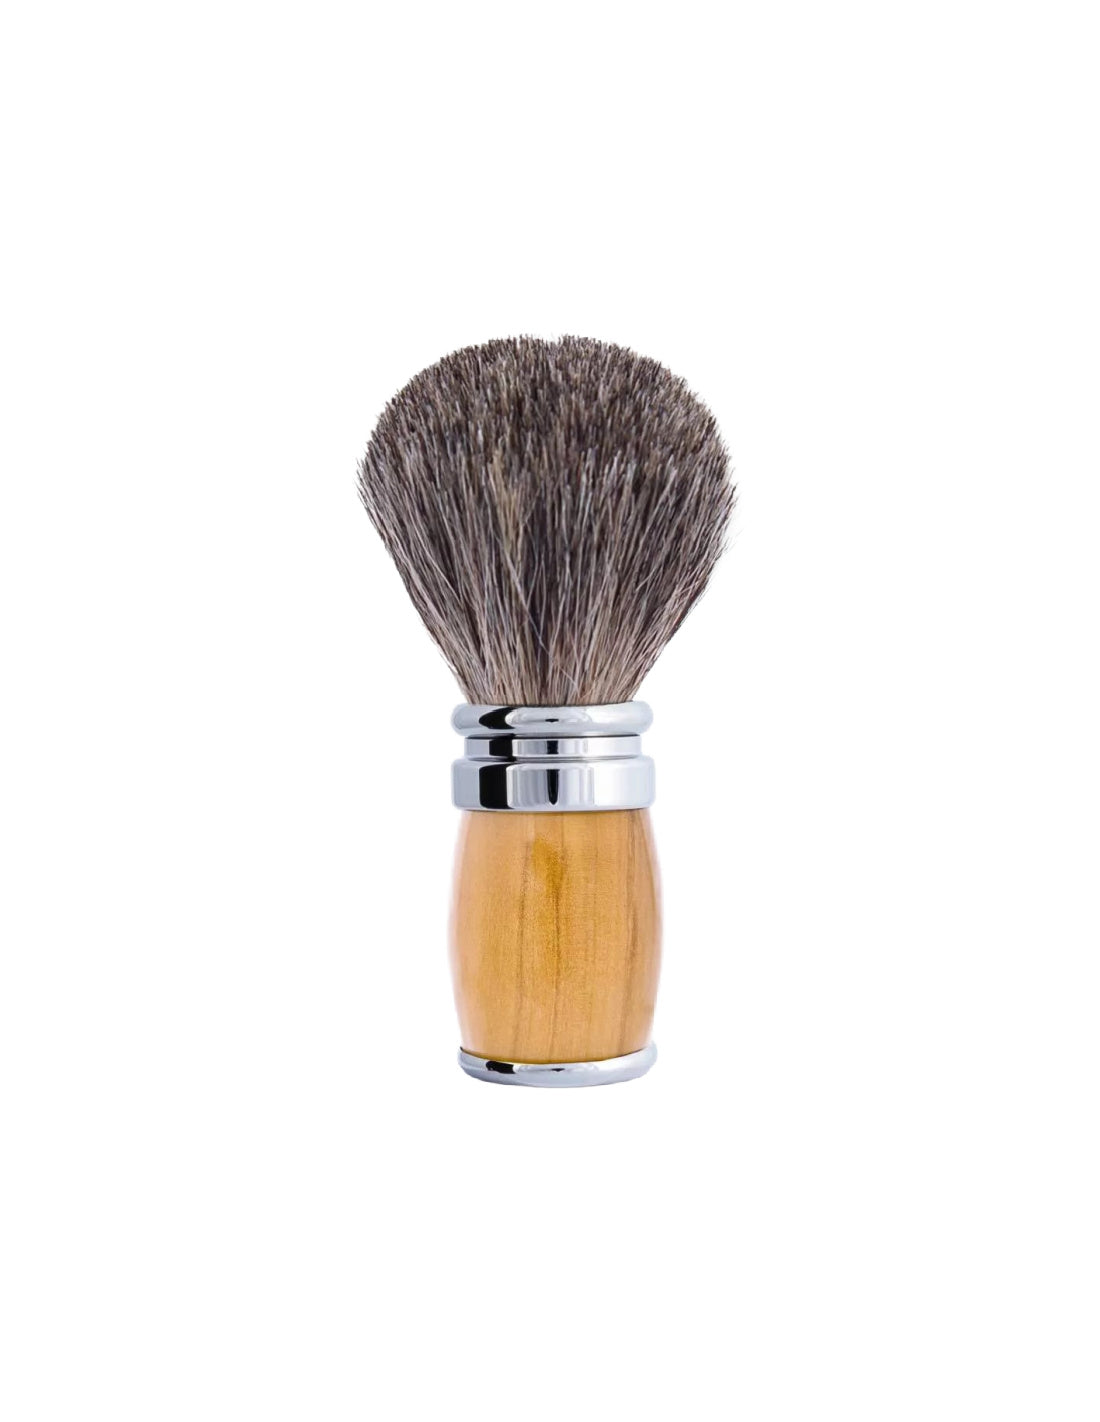 Plisson 1808 Olive Wood and Chrome Finish Russian Grey Genuine Badger Shaving Brush - Joris